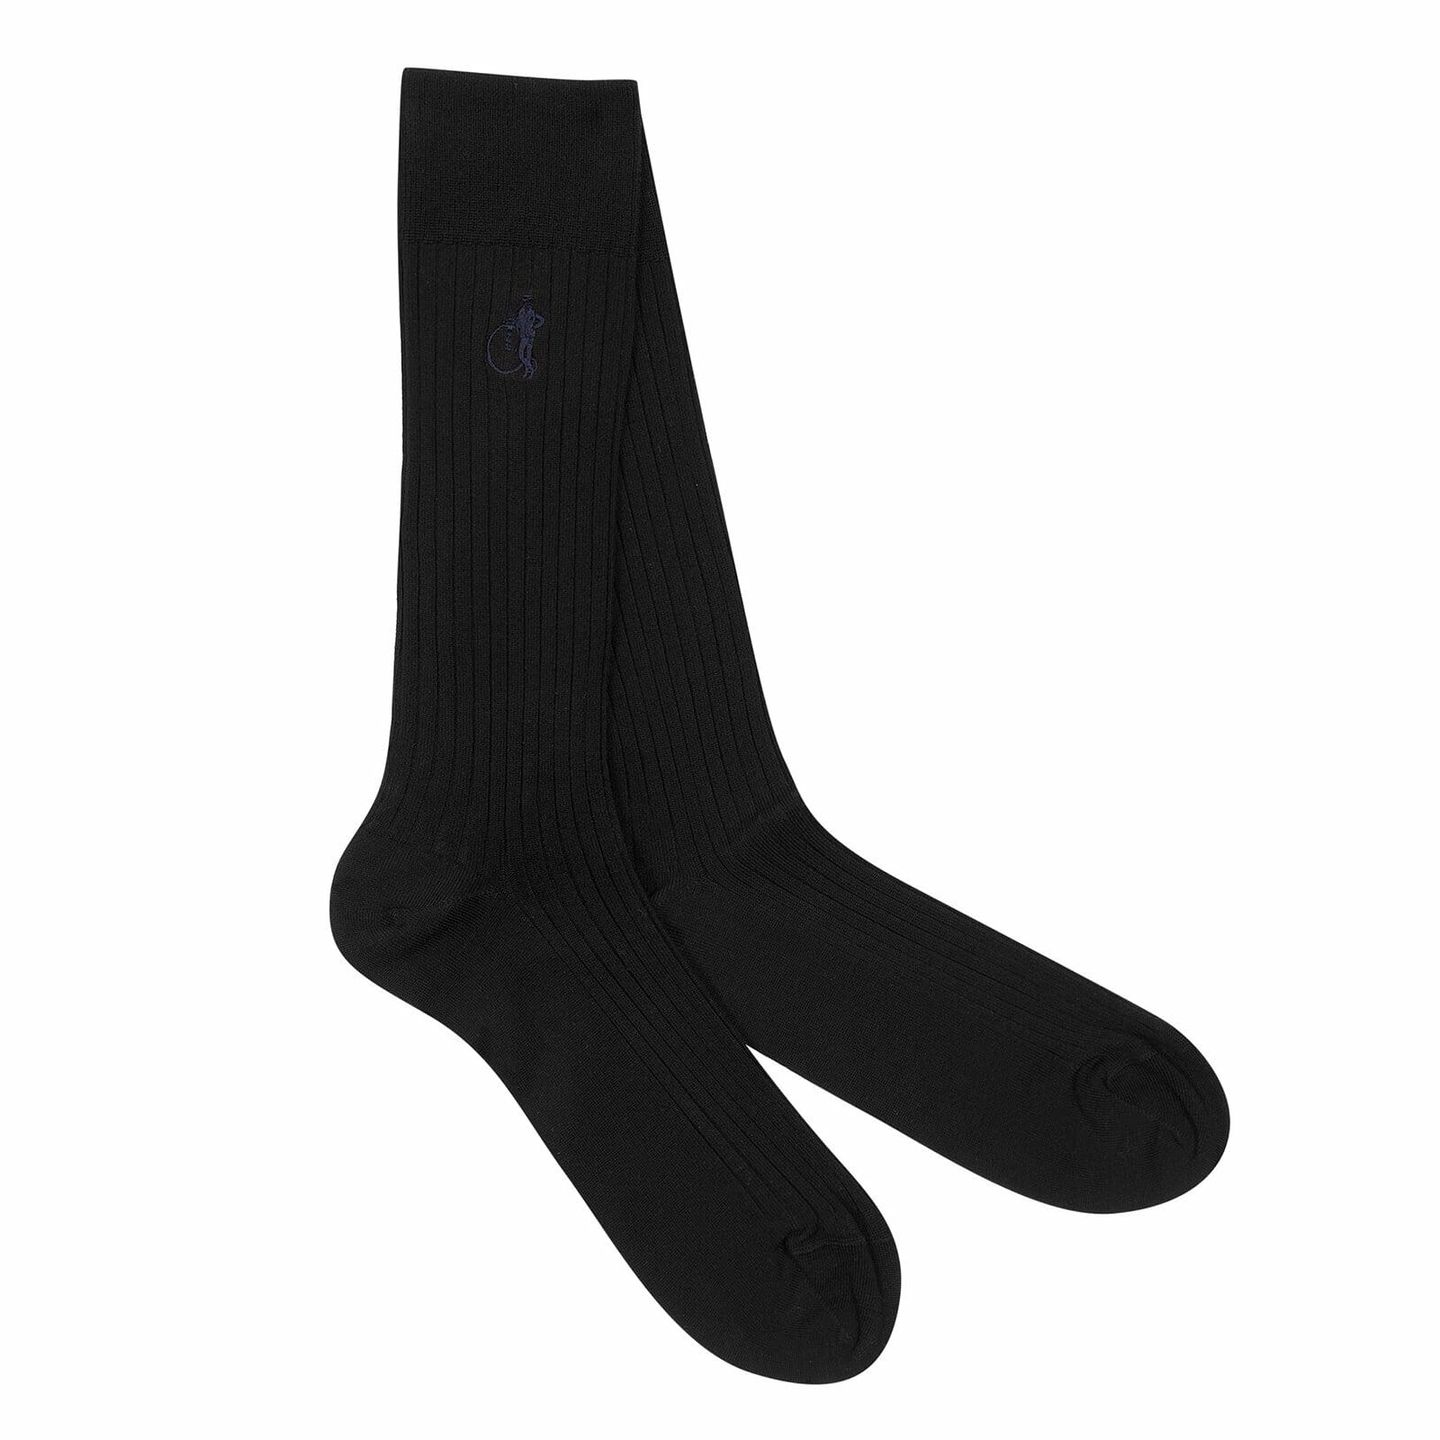 Ebony black sartorial cotton socks for men